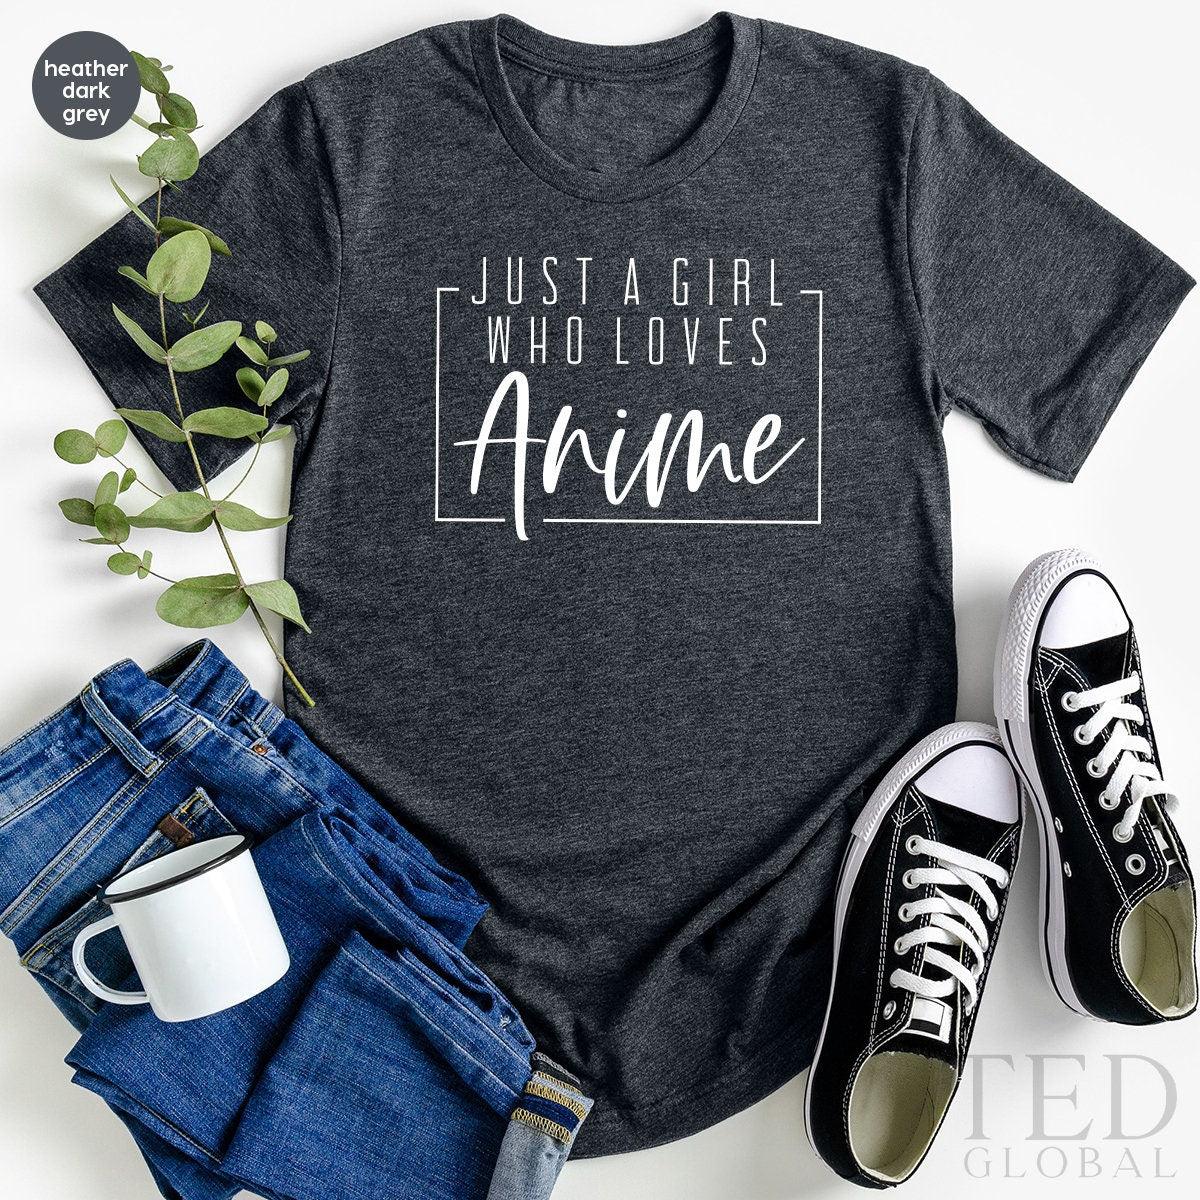 Anime Shirt, Just A Girl Who Loves Anime T-Shirt, Kawaii Anime Fans Tshirt, Japan Culture Tee, Anime,Funny Anime Shirt, Anime TShirt - Fastdeliverytees.com